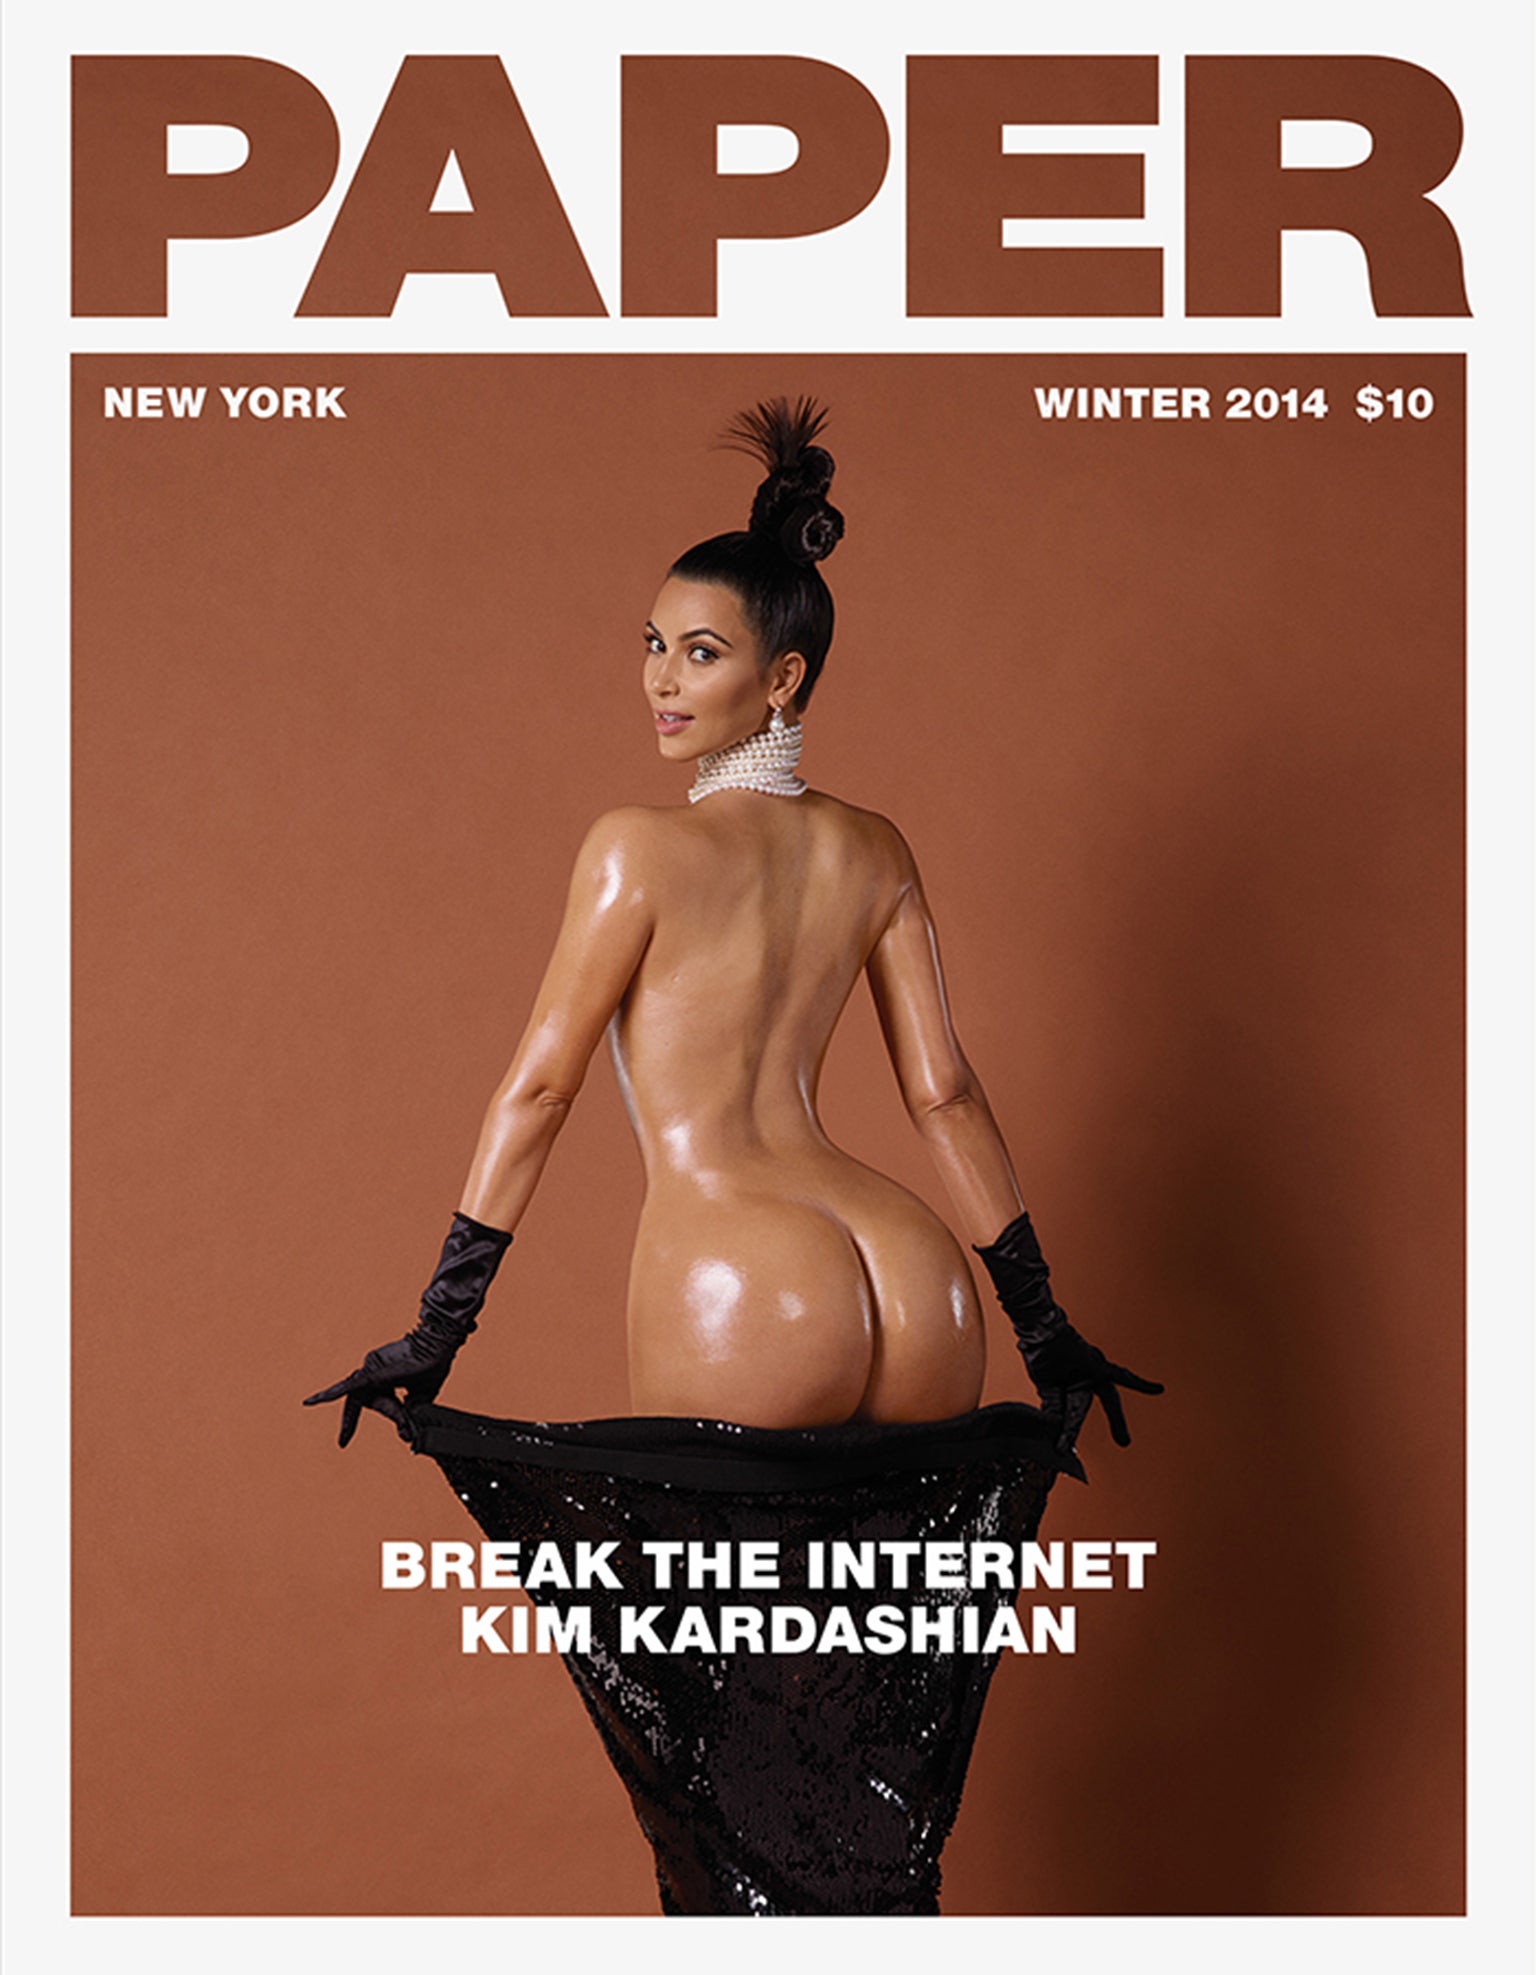 Kim Kardashian as pictured for Paper magazine